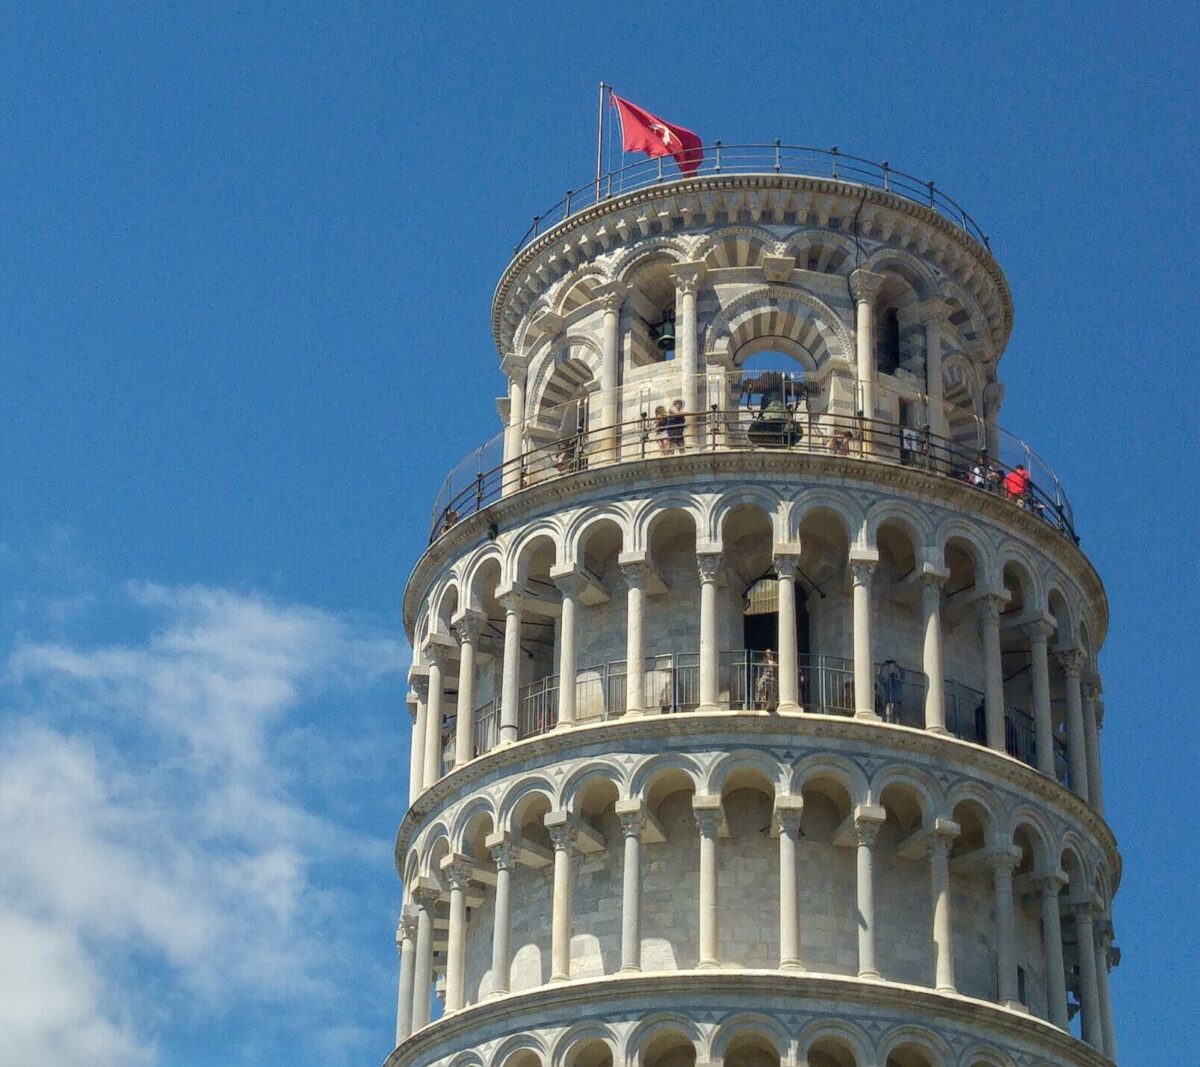 Tower of Pisa